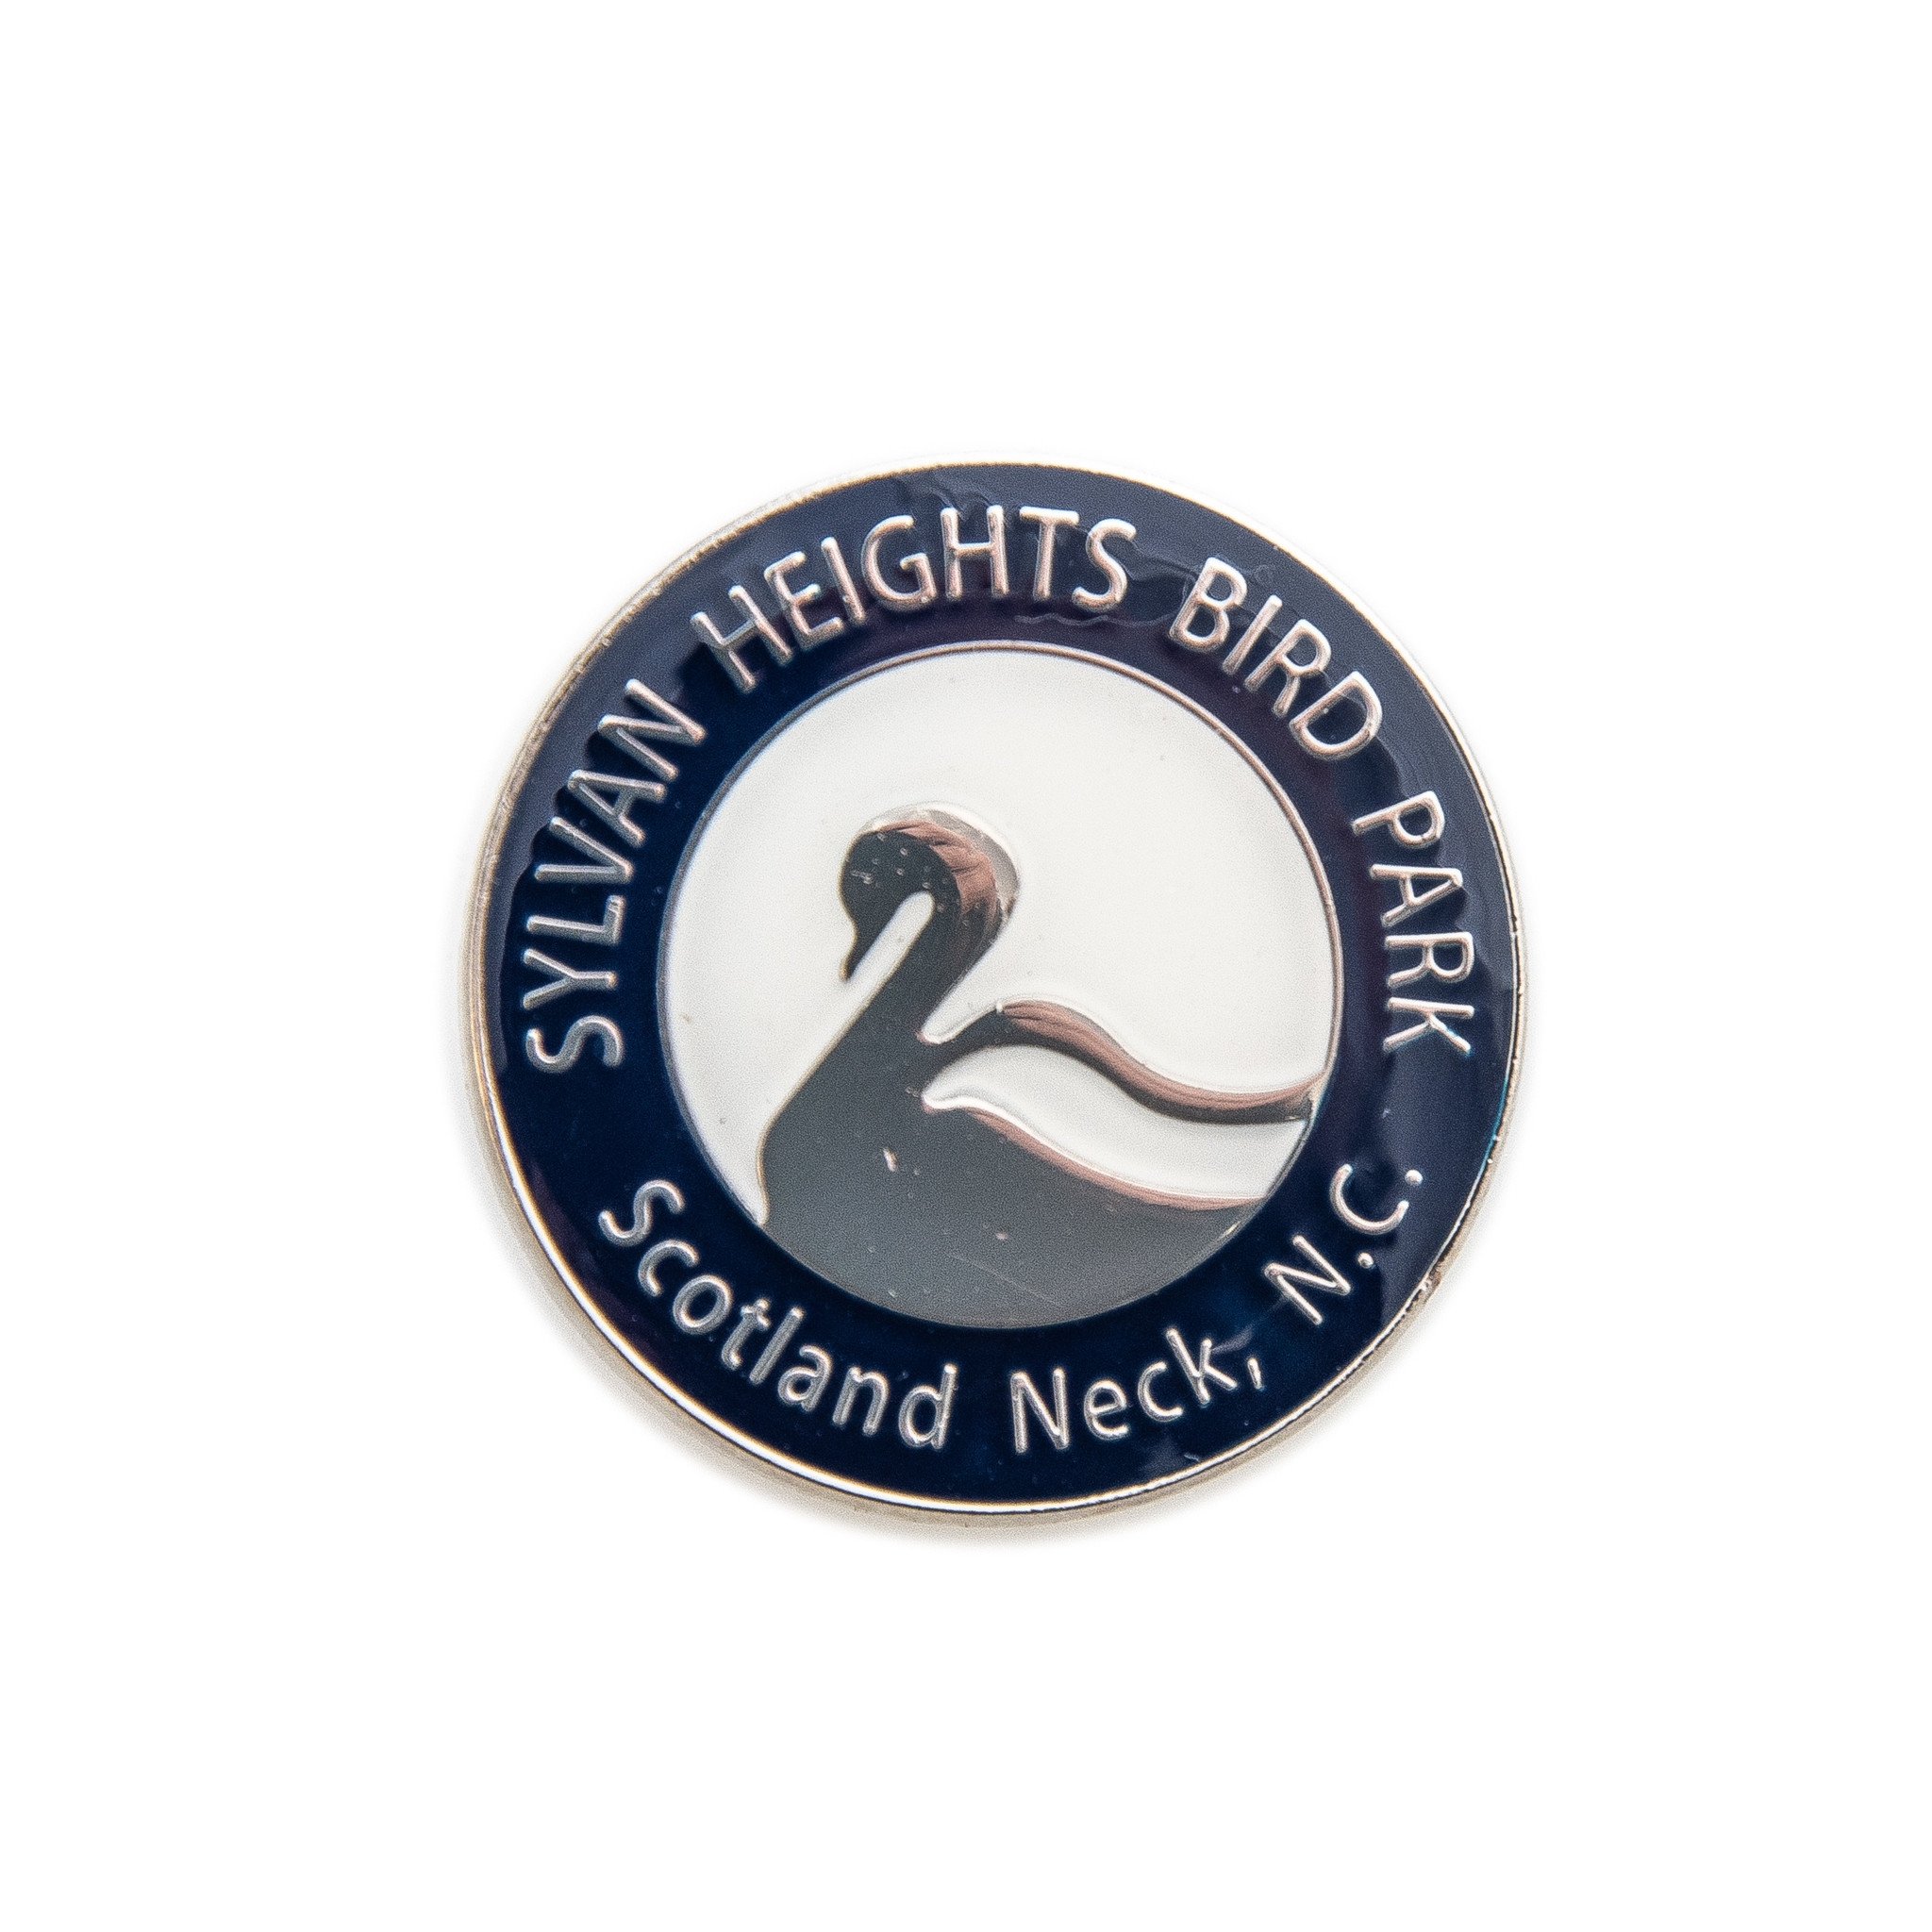 Sylvan Heights Bird Stickers - Sylvan Heights Bird Park Shop